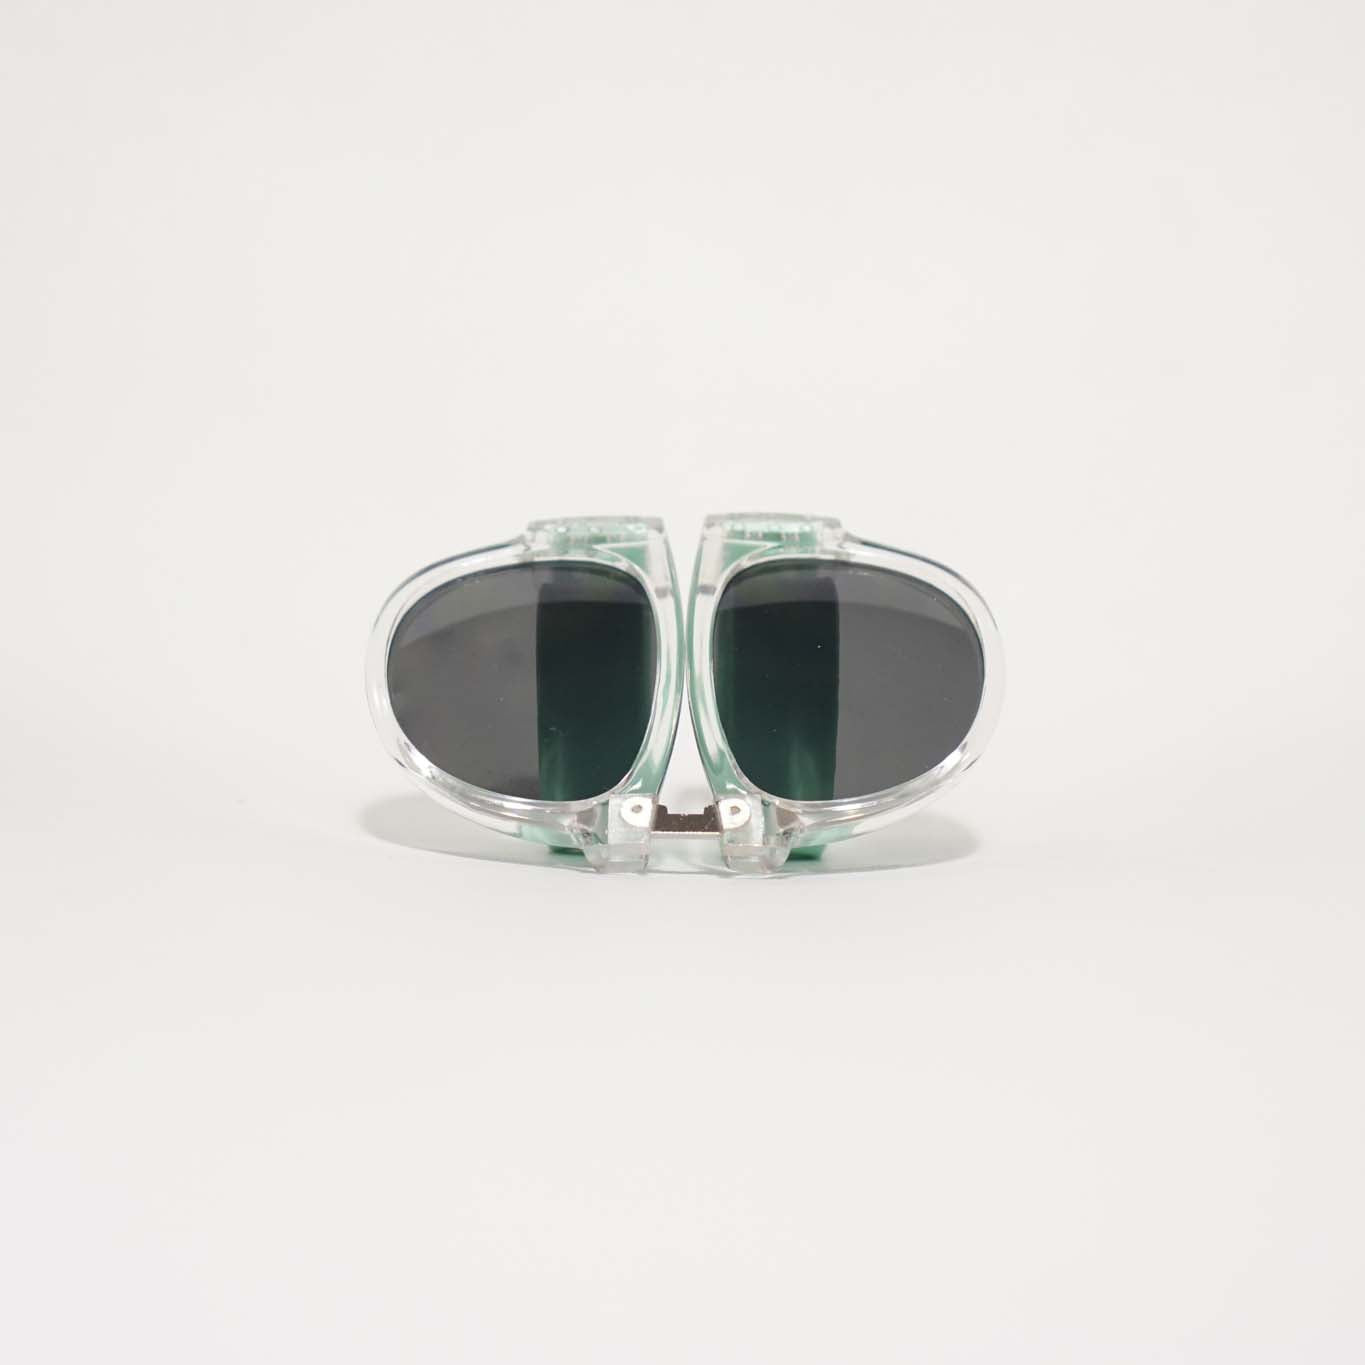 Mint Snappable Sunglasses: Original